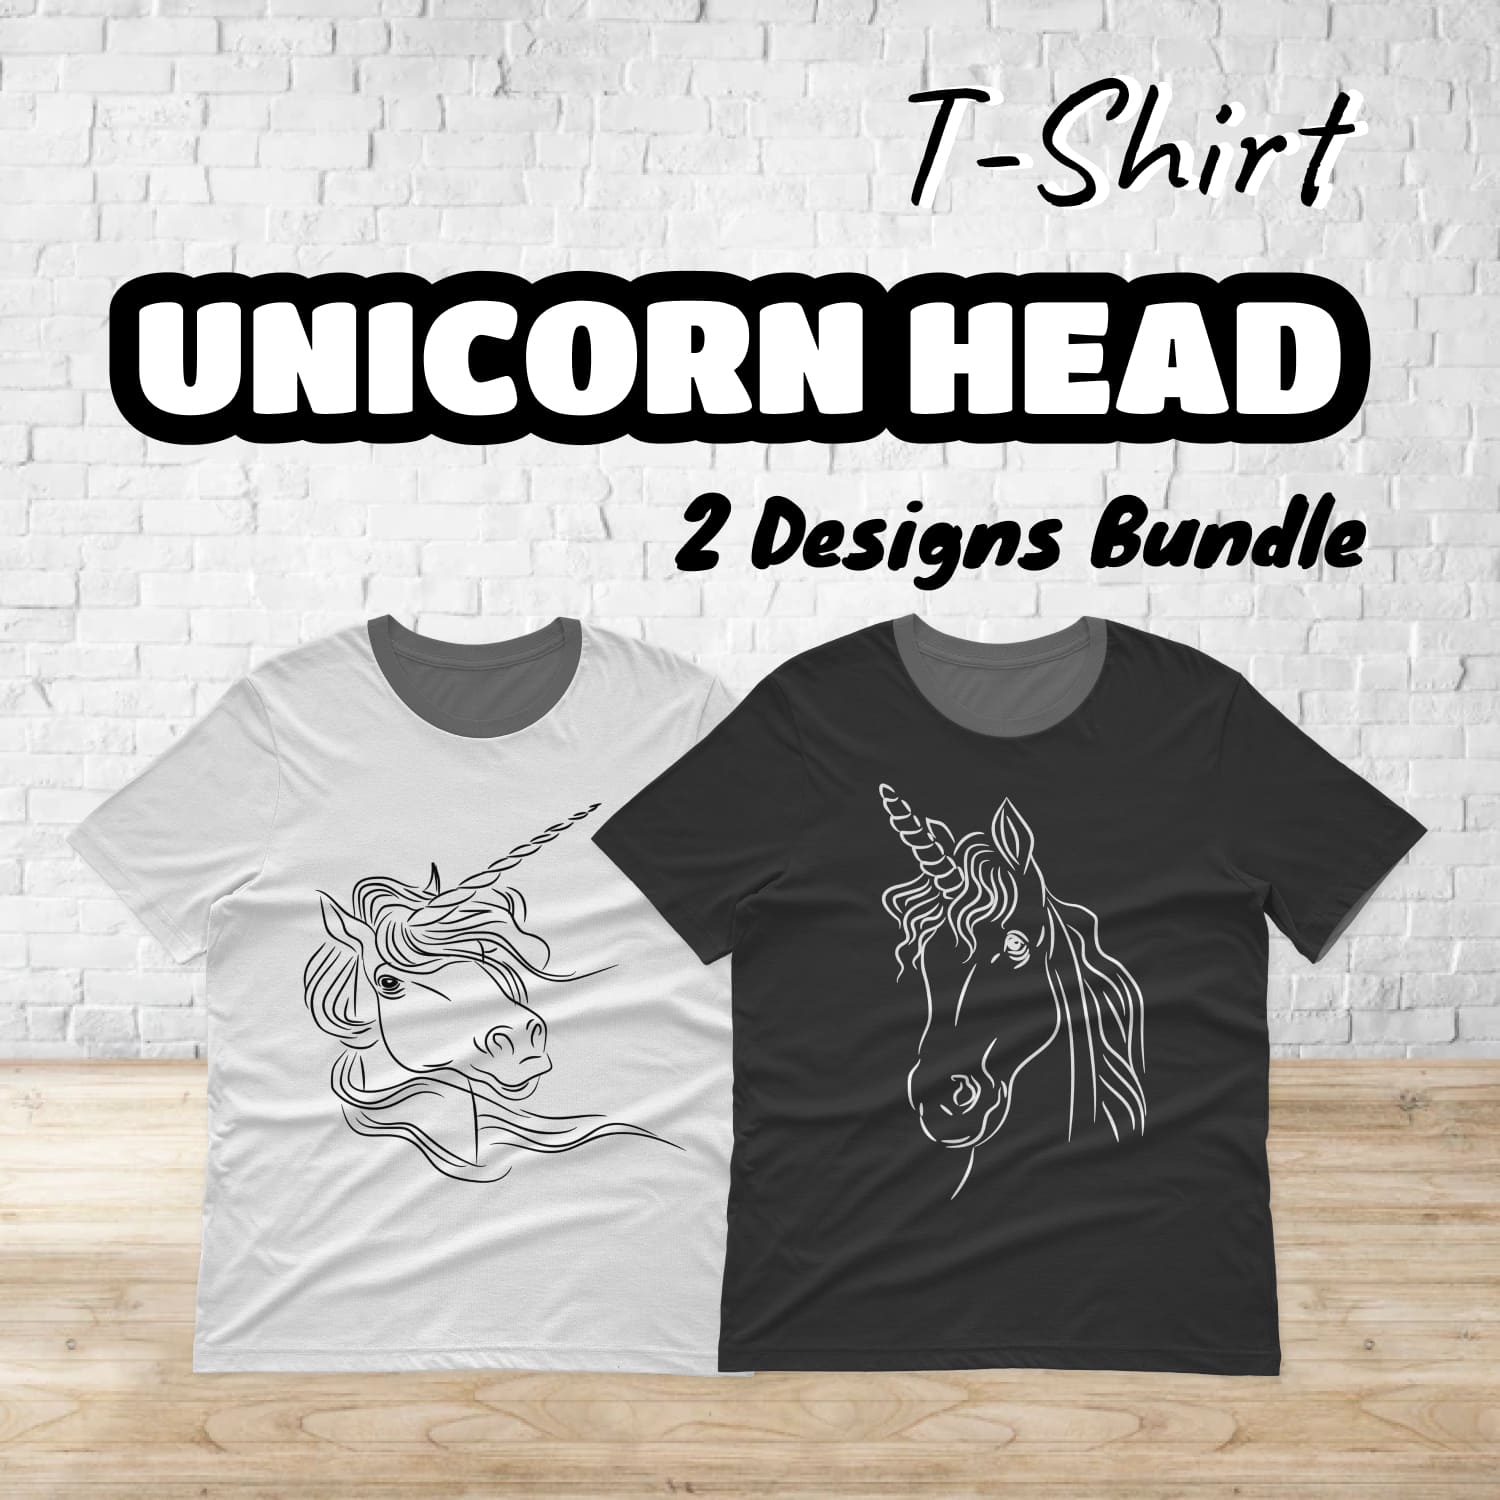 Unicorn Head T-shirt Designs Bundle.